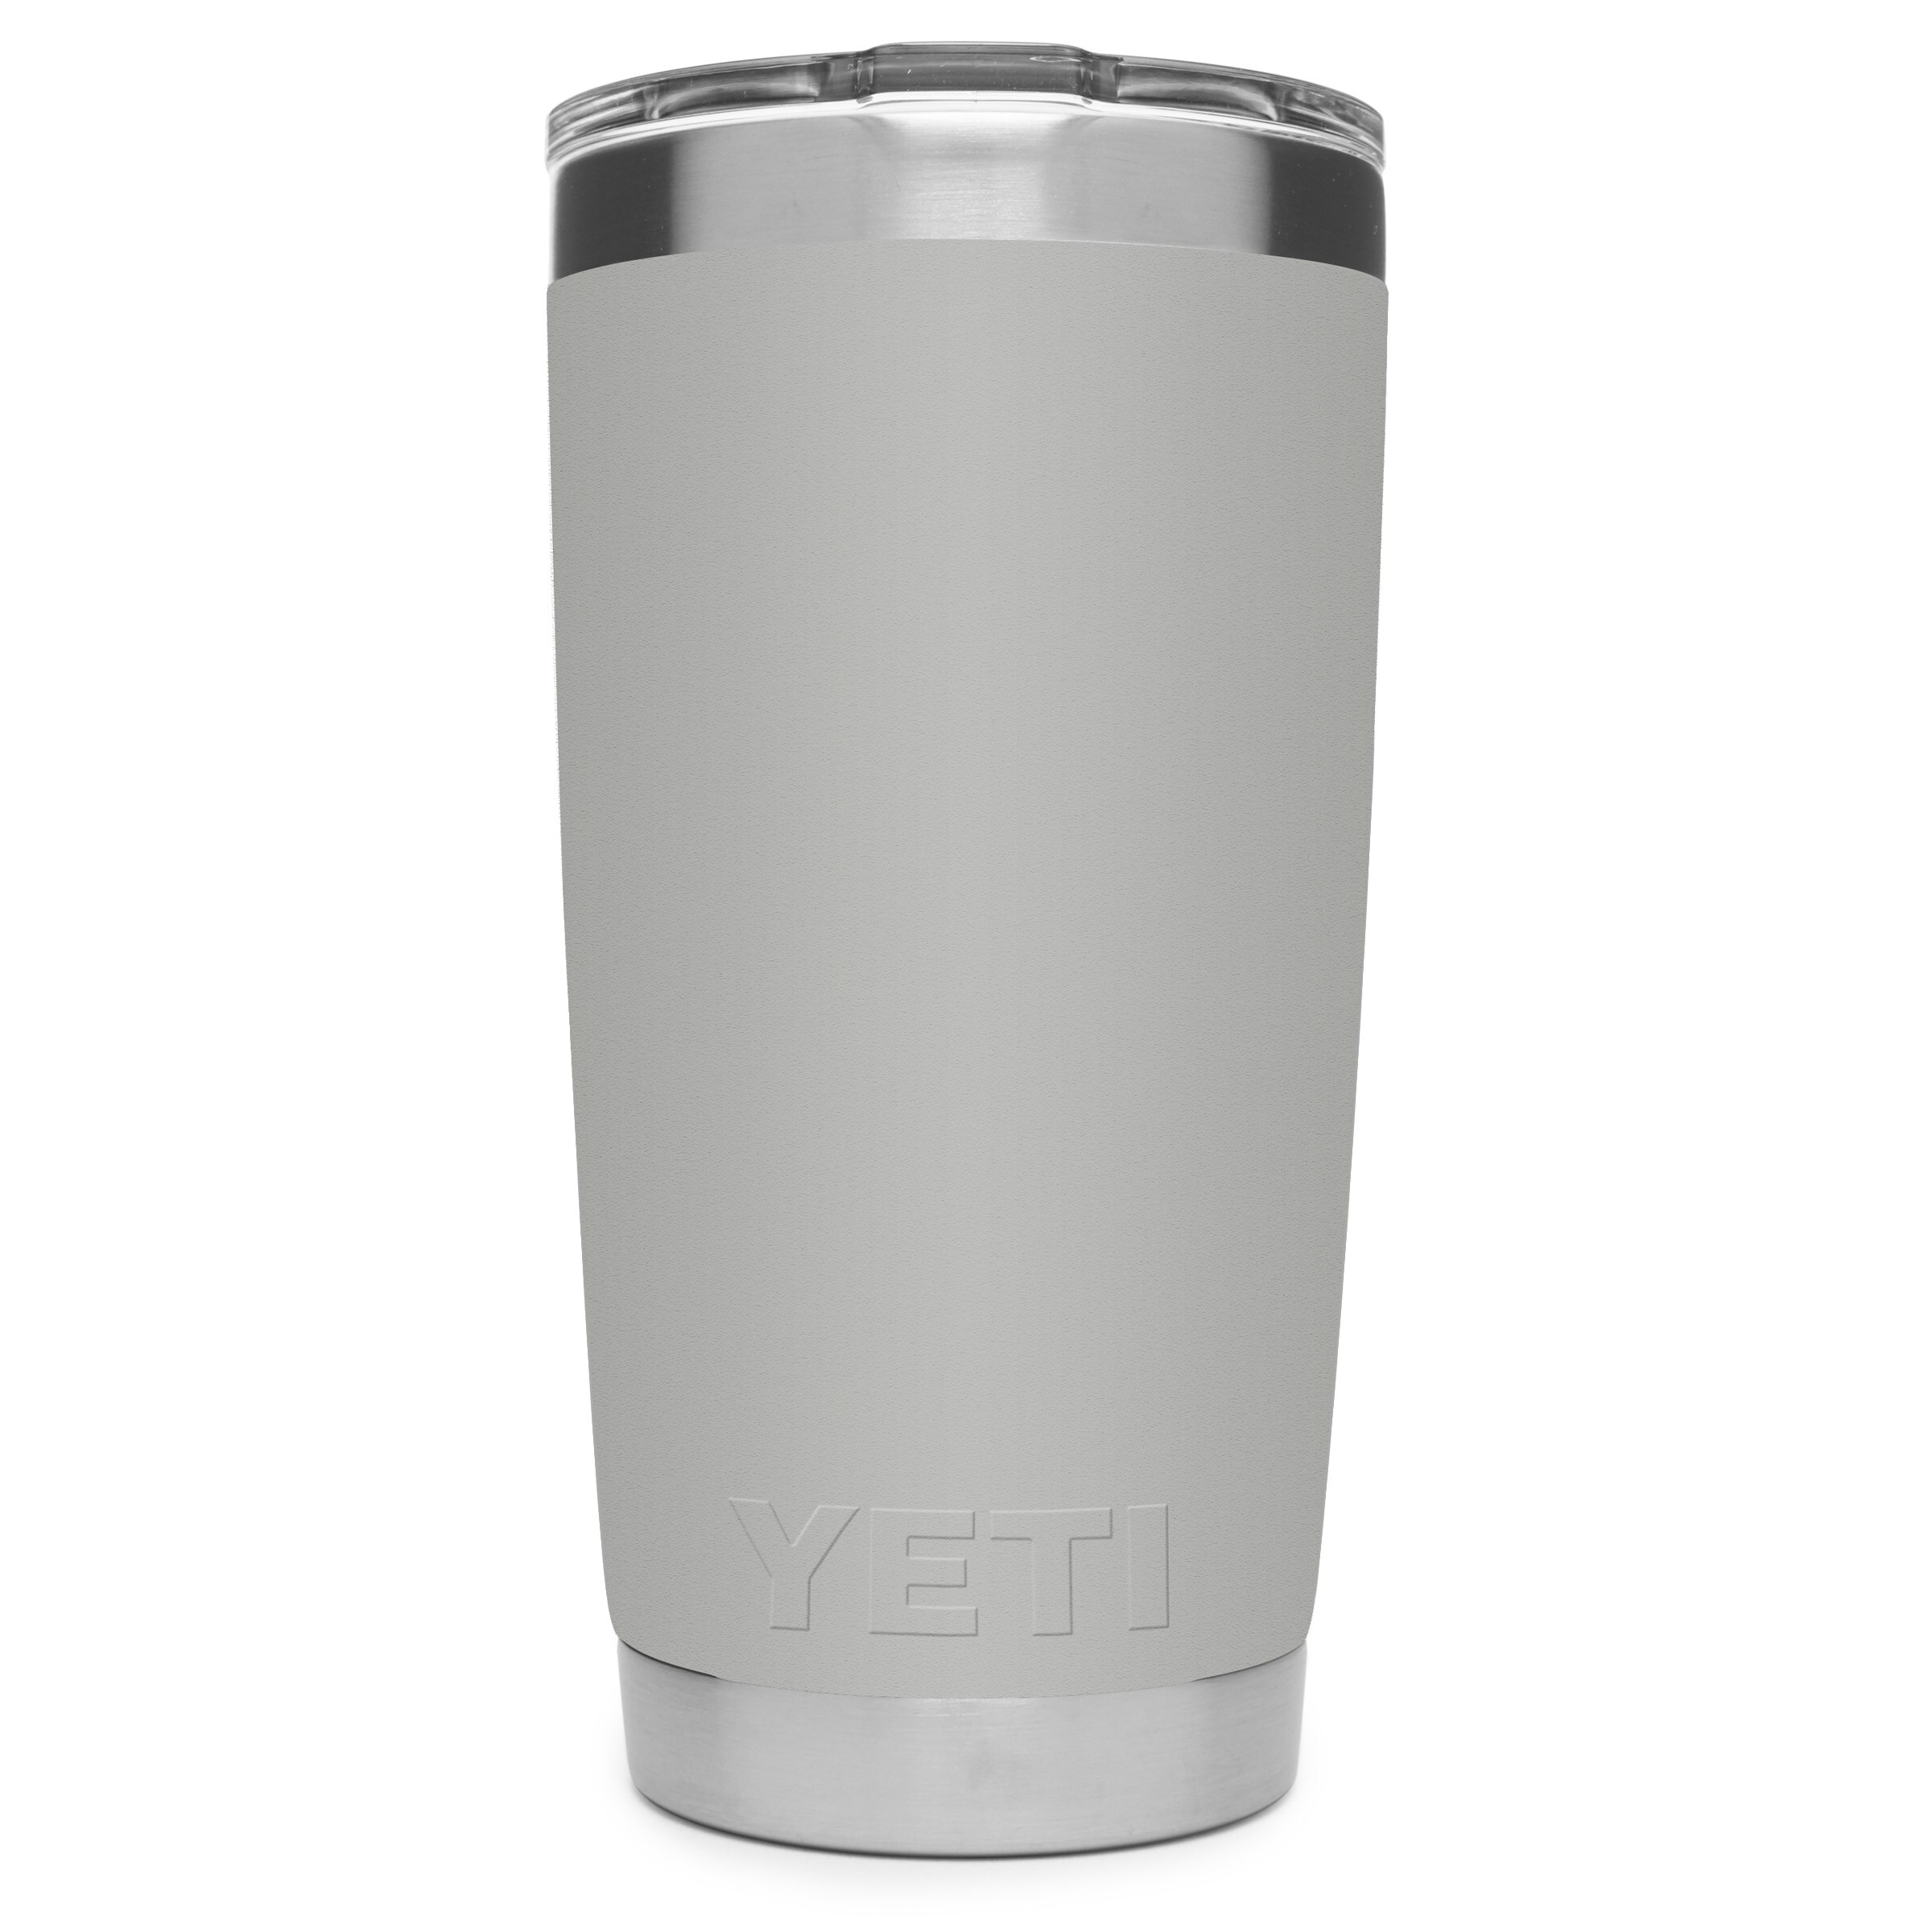 Yeti Rambler 20 Oz. Silver Stainless Steel Insulated Tumbler - Bliffert  Lumber and Hardware